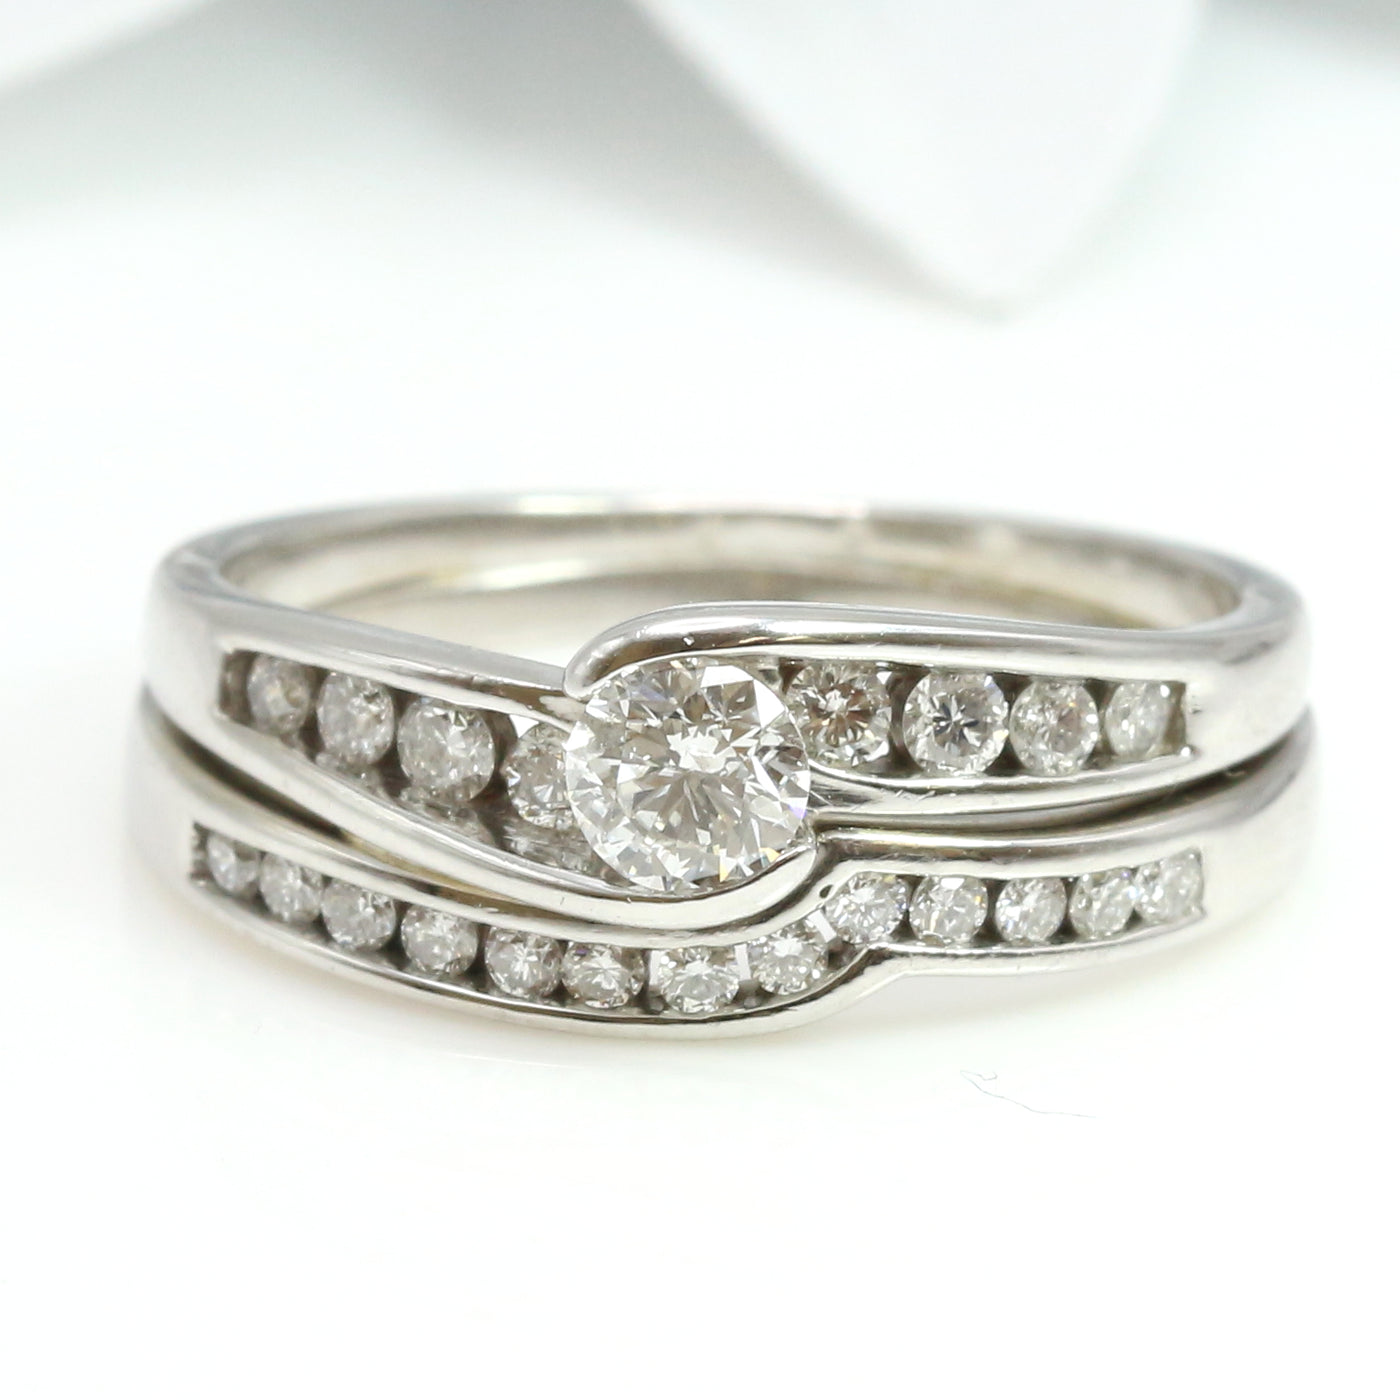 Soldered Set Wedding & Engagement Ring